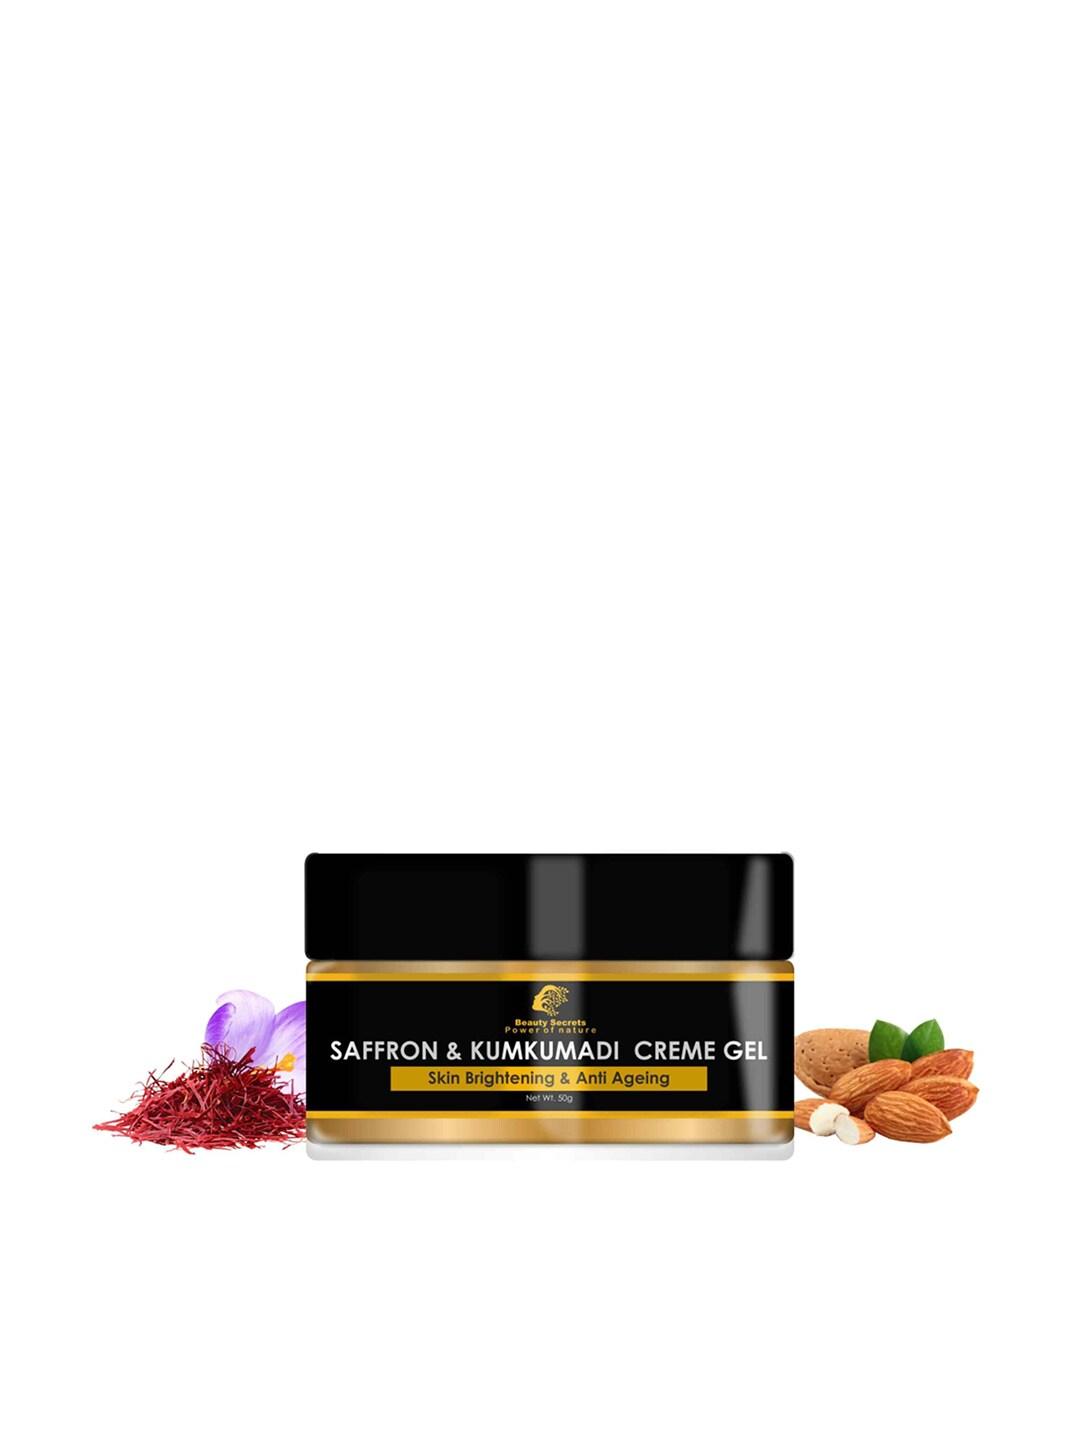 Beauty Secrets Saffron & Kumkumadi Face Cream Gel 50gm